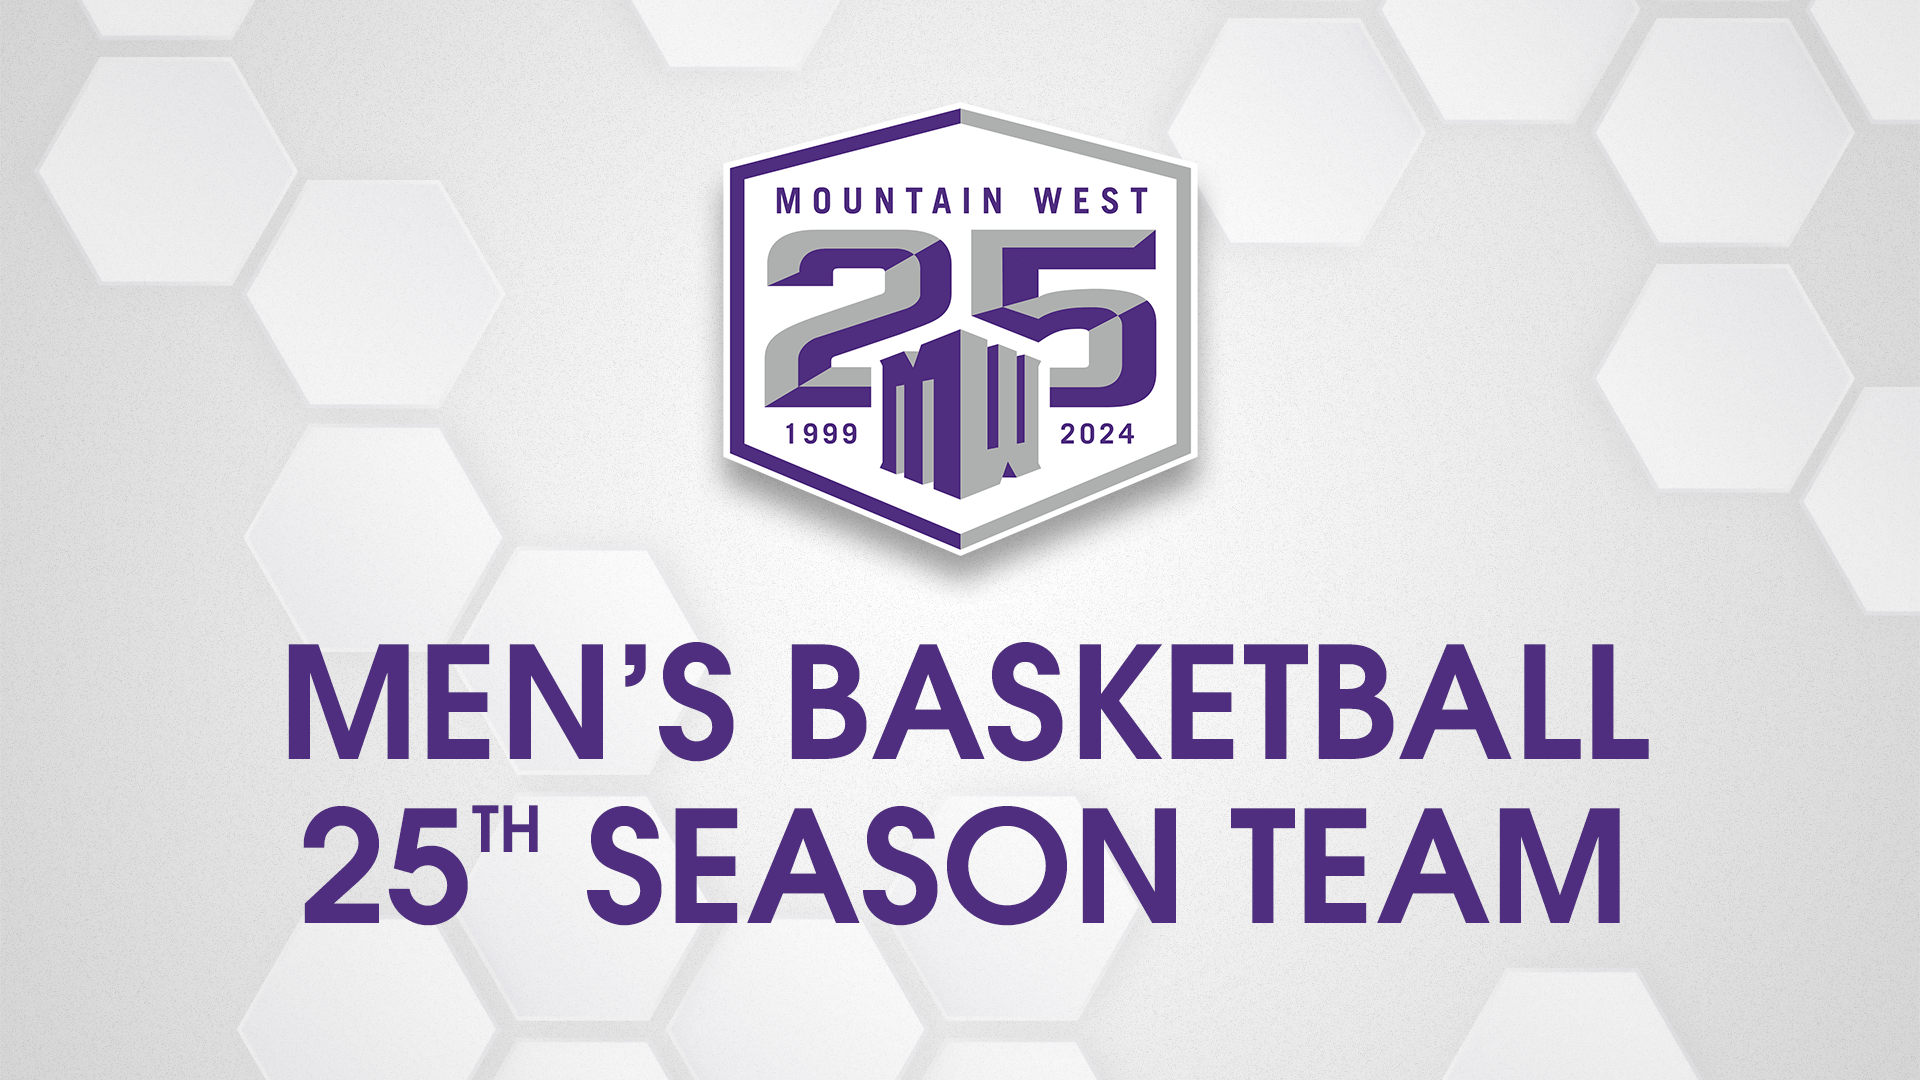 Mountain West Announces 25th Season Men's Basketball Team